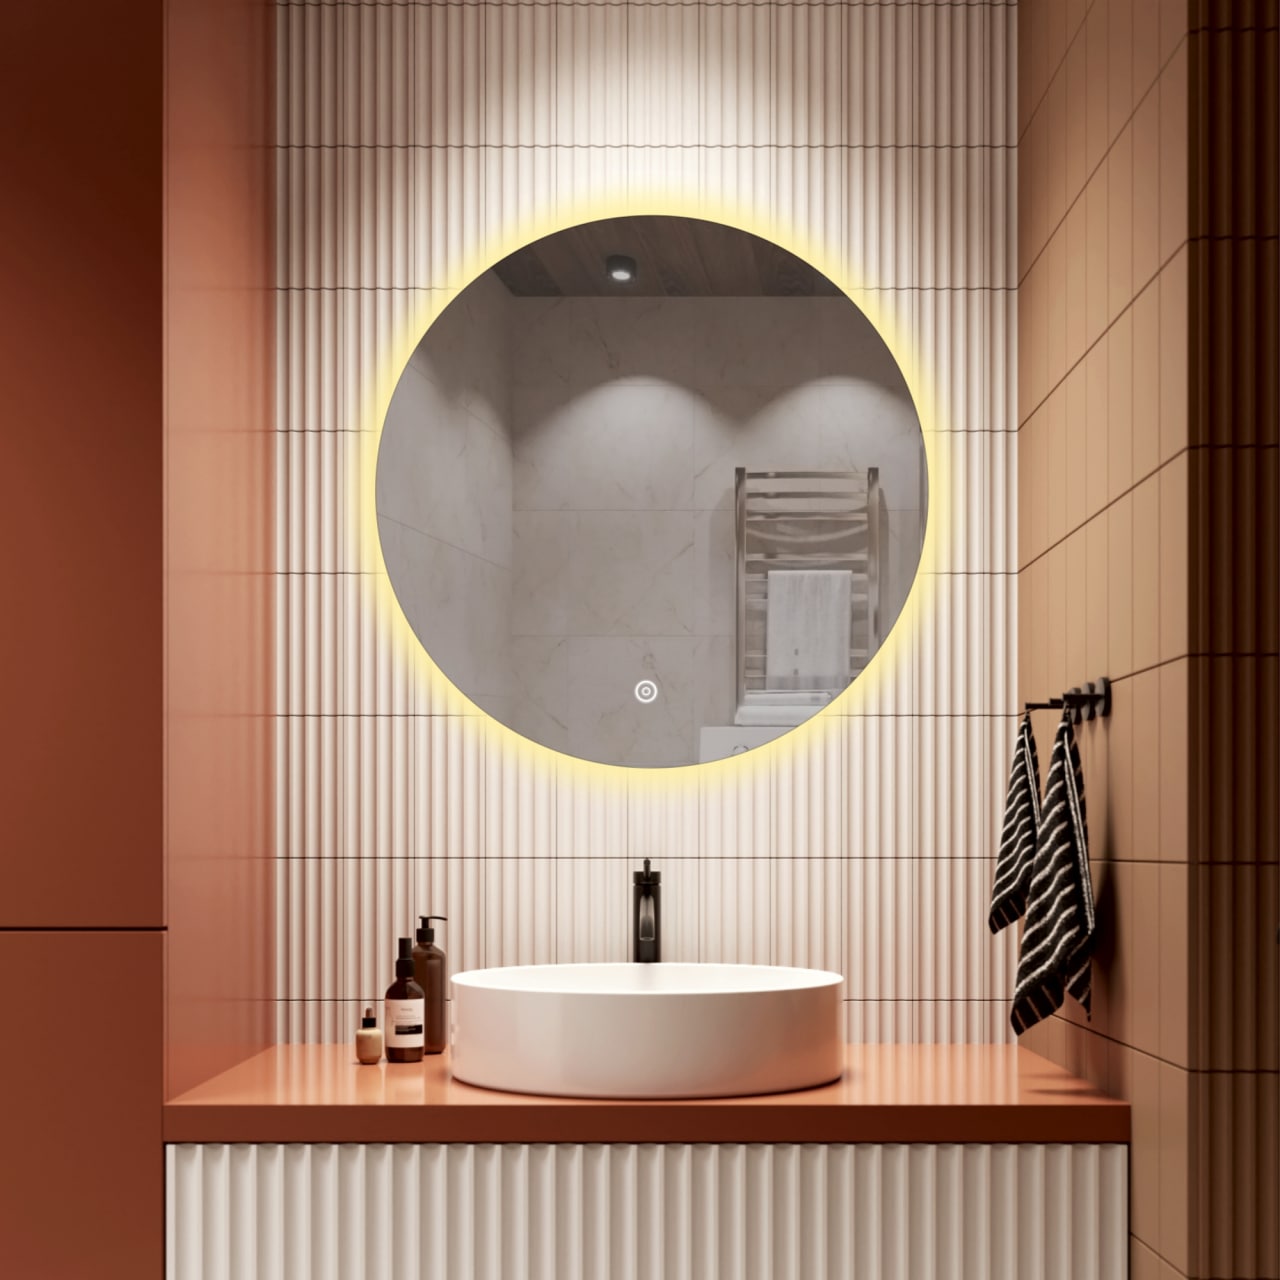 Зеркало для ванной Alfa Mirrors с теплой подсветкой 3200К круглое 80см, арт. Na-8Na-8t зеркало для ванной alfa mirrors с дневной подсветкой 4200к круглое 60см арт na 6vzd